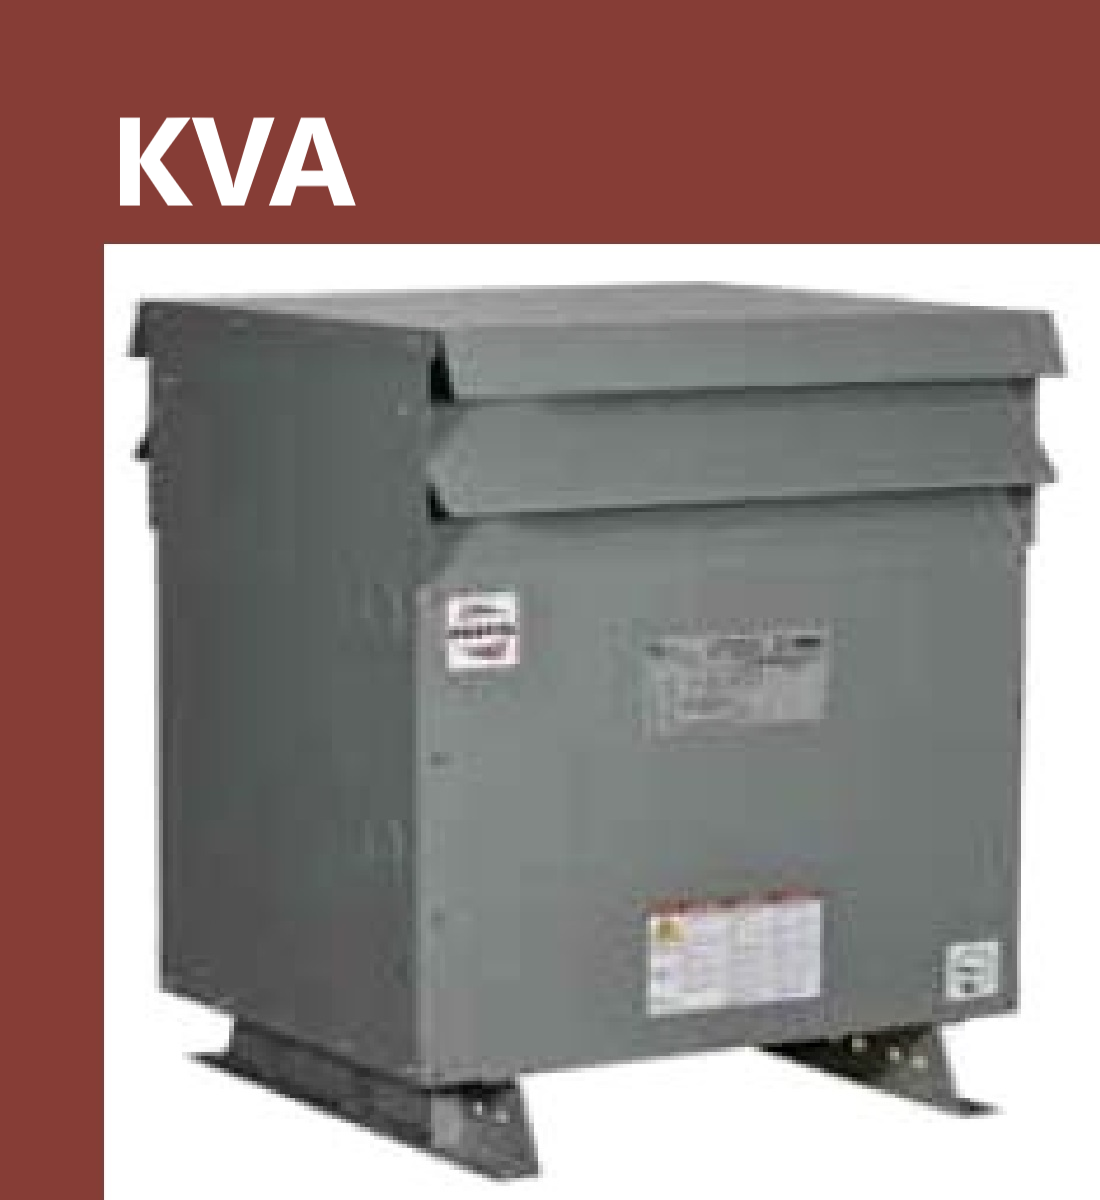 Amps to KVA Calculator